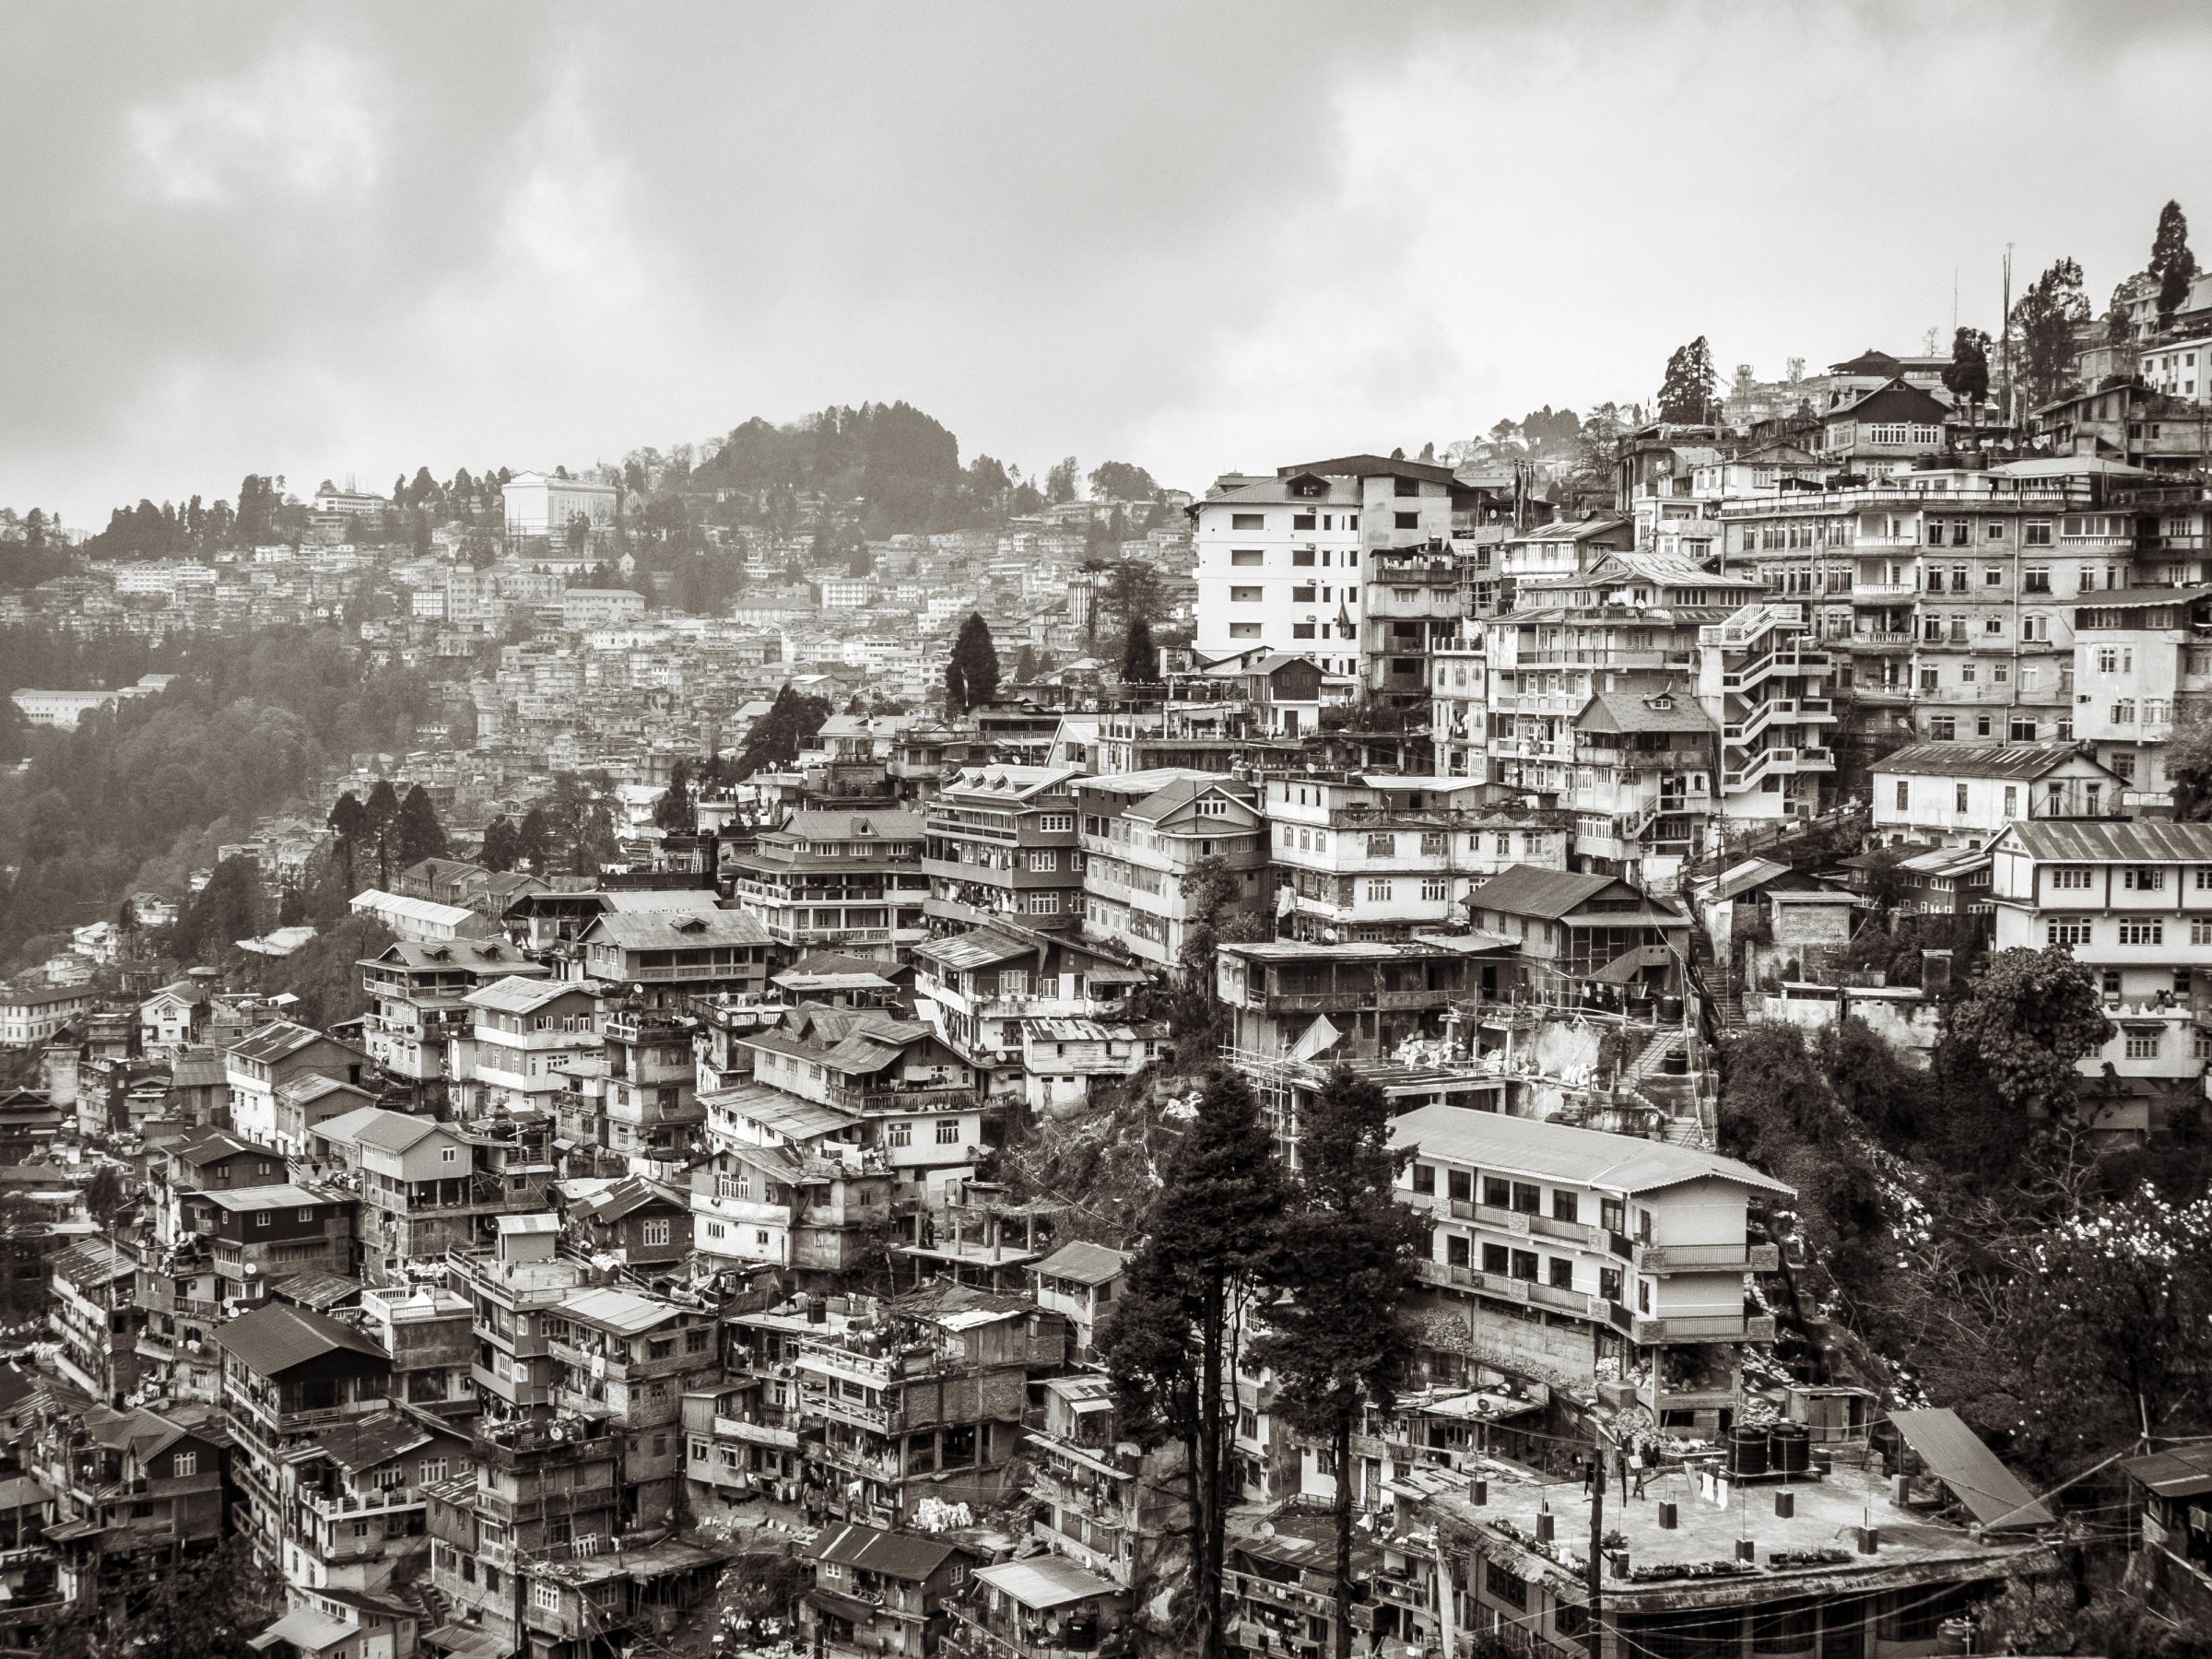 Gorkhaland - Darjeeling, India 2018